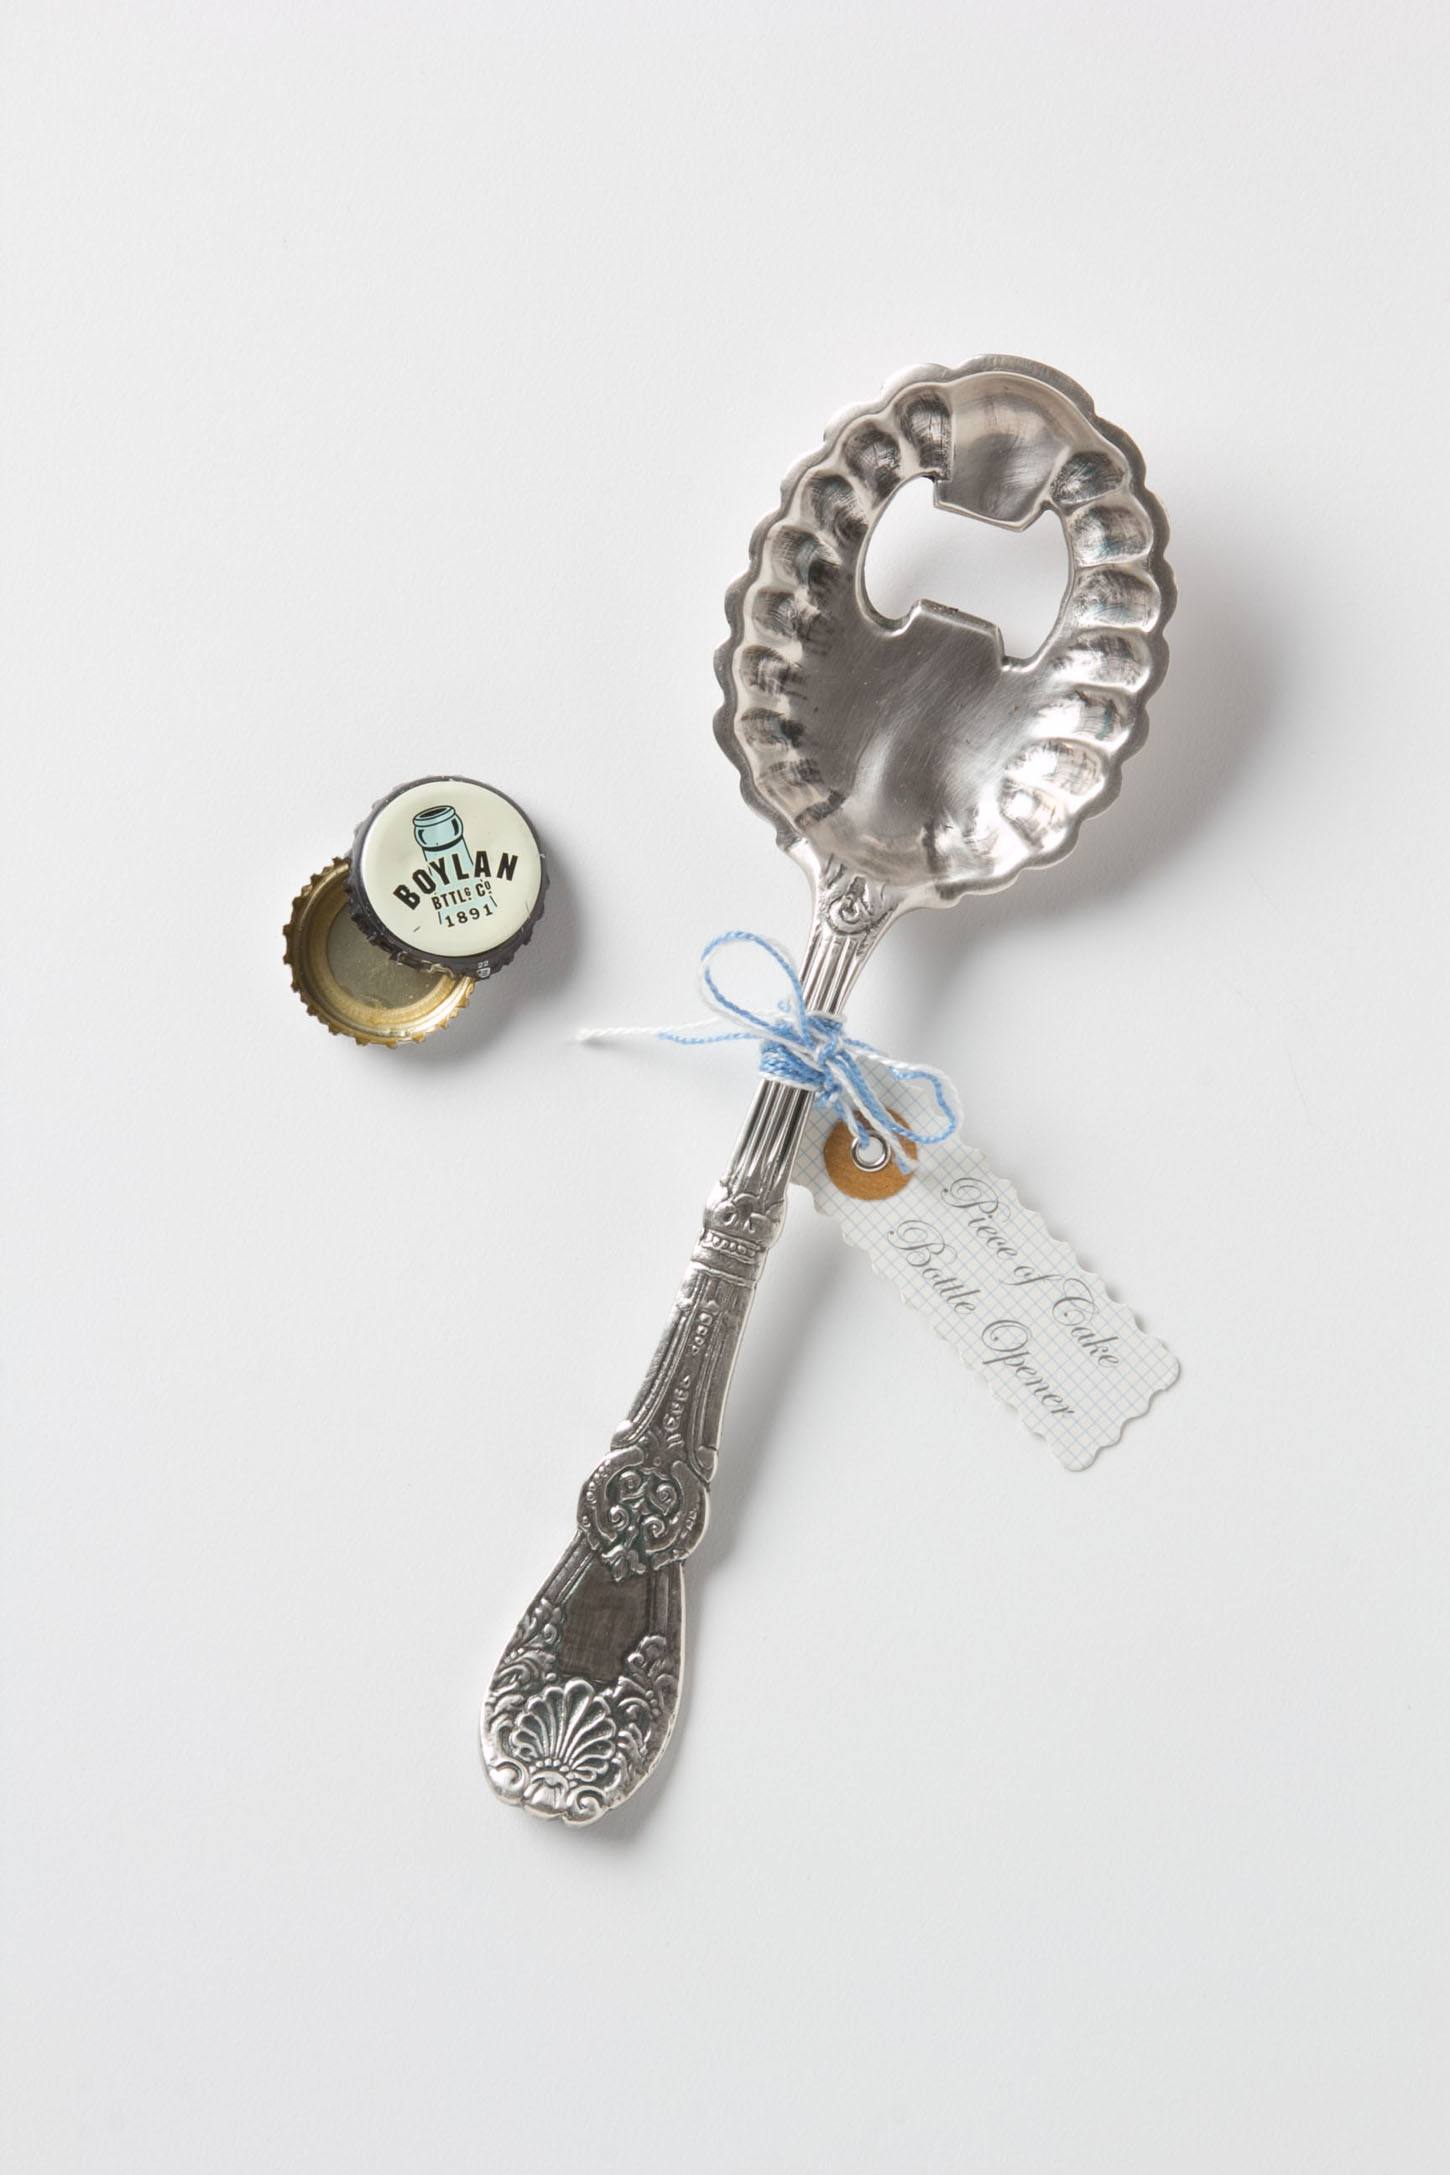 Silver spoon bottle opener with bottle caps